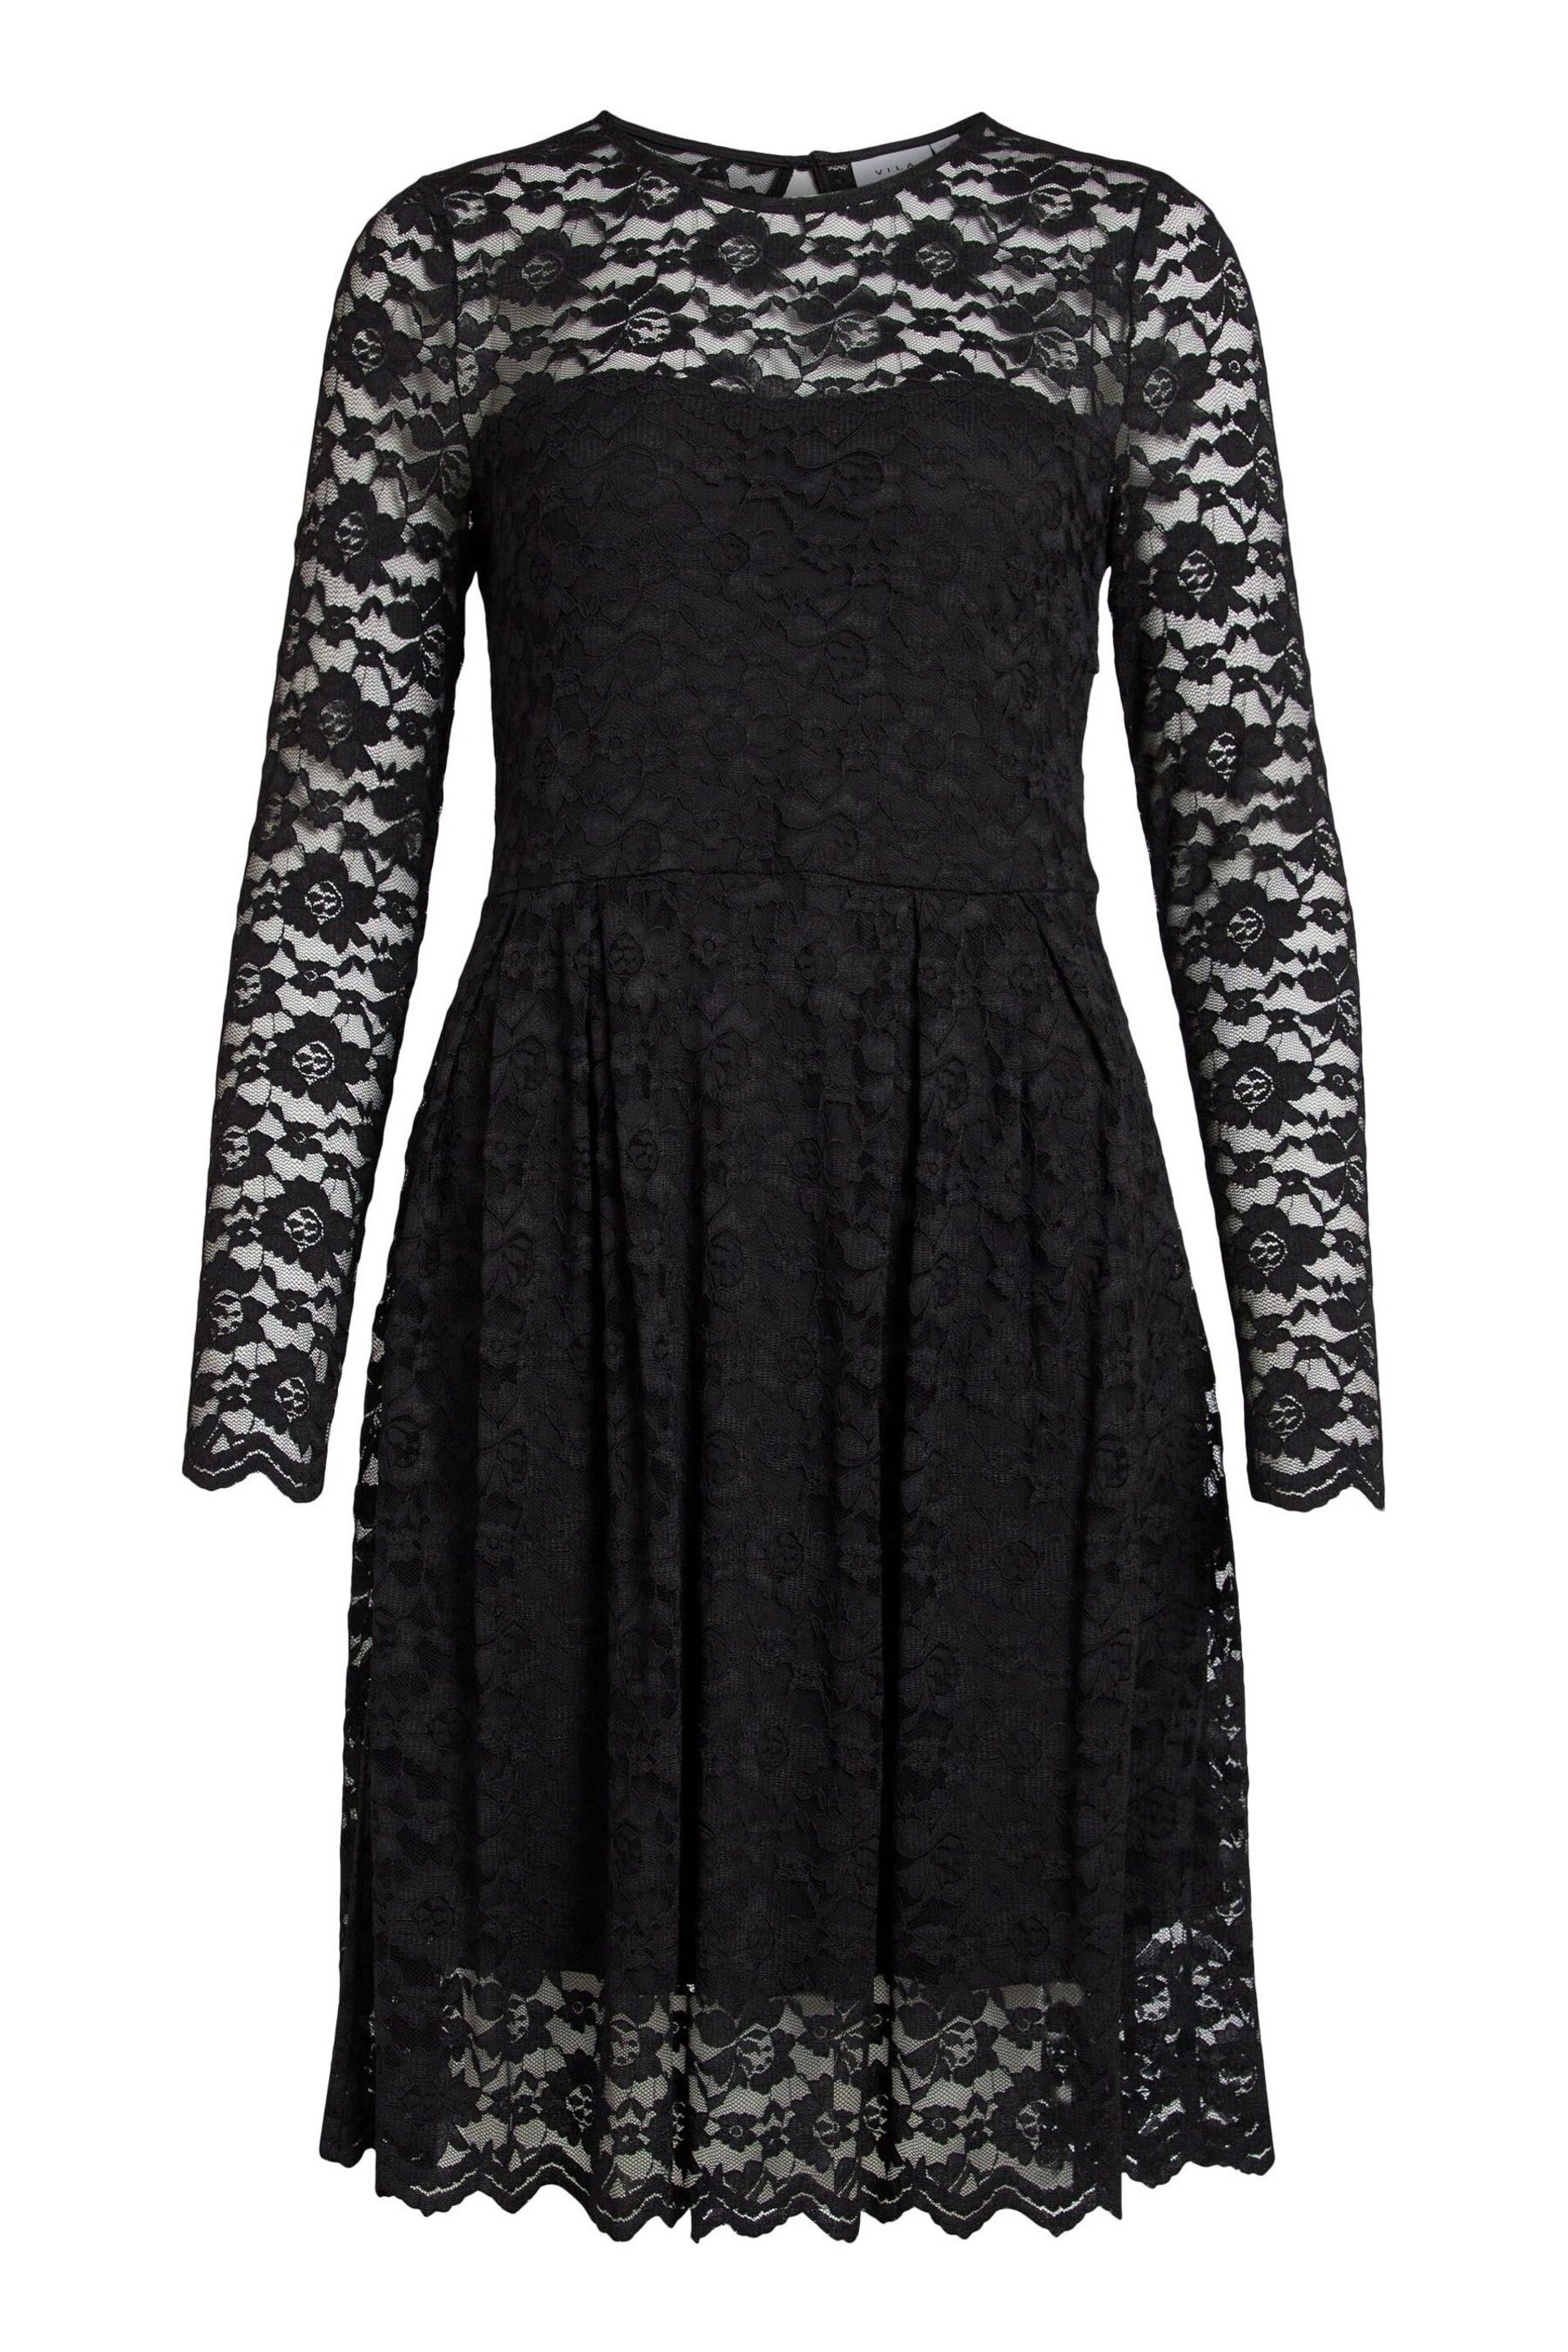 VILA Black Sleeveless Lace And Tulle Maxi Dress - Image 5 of 5